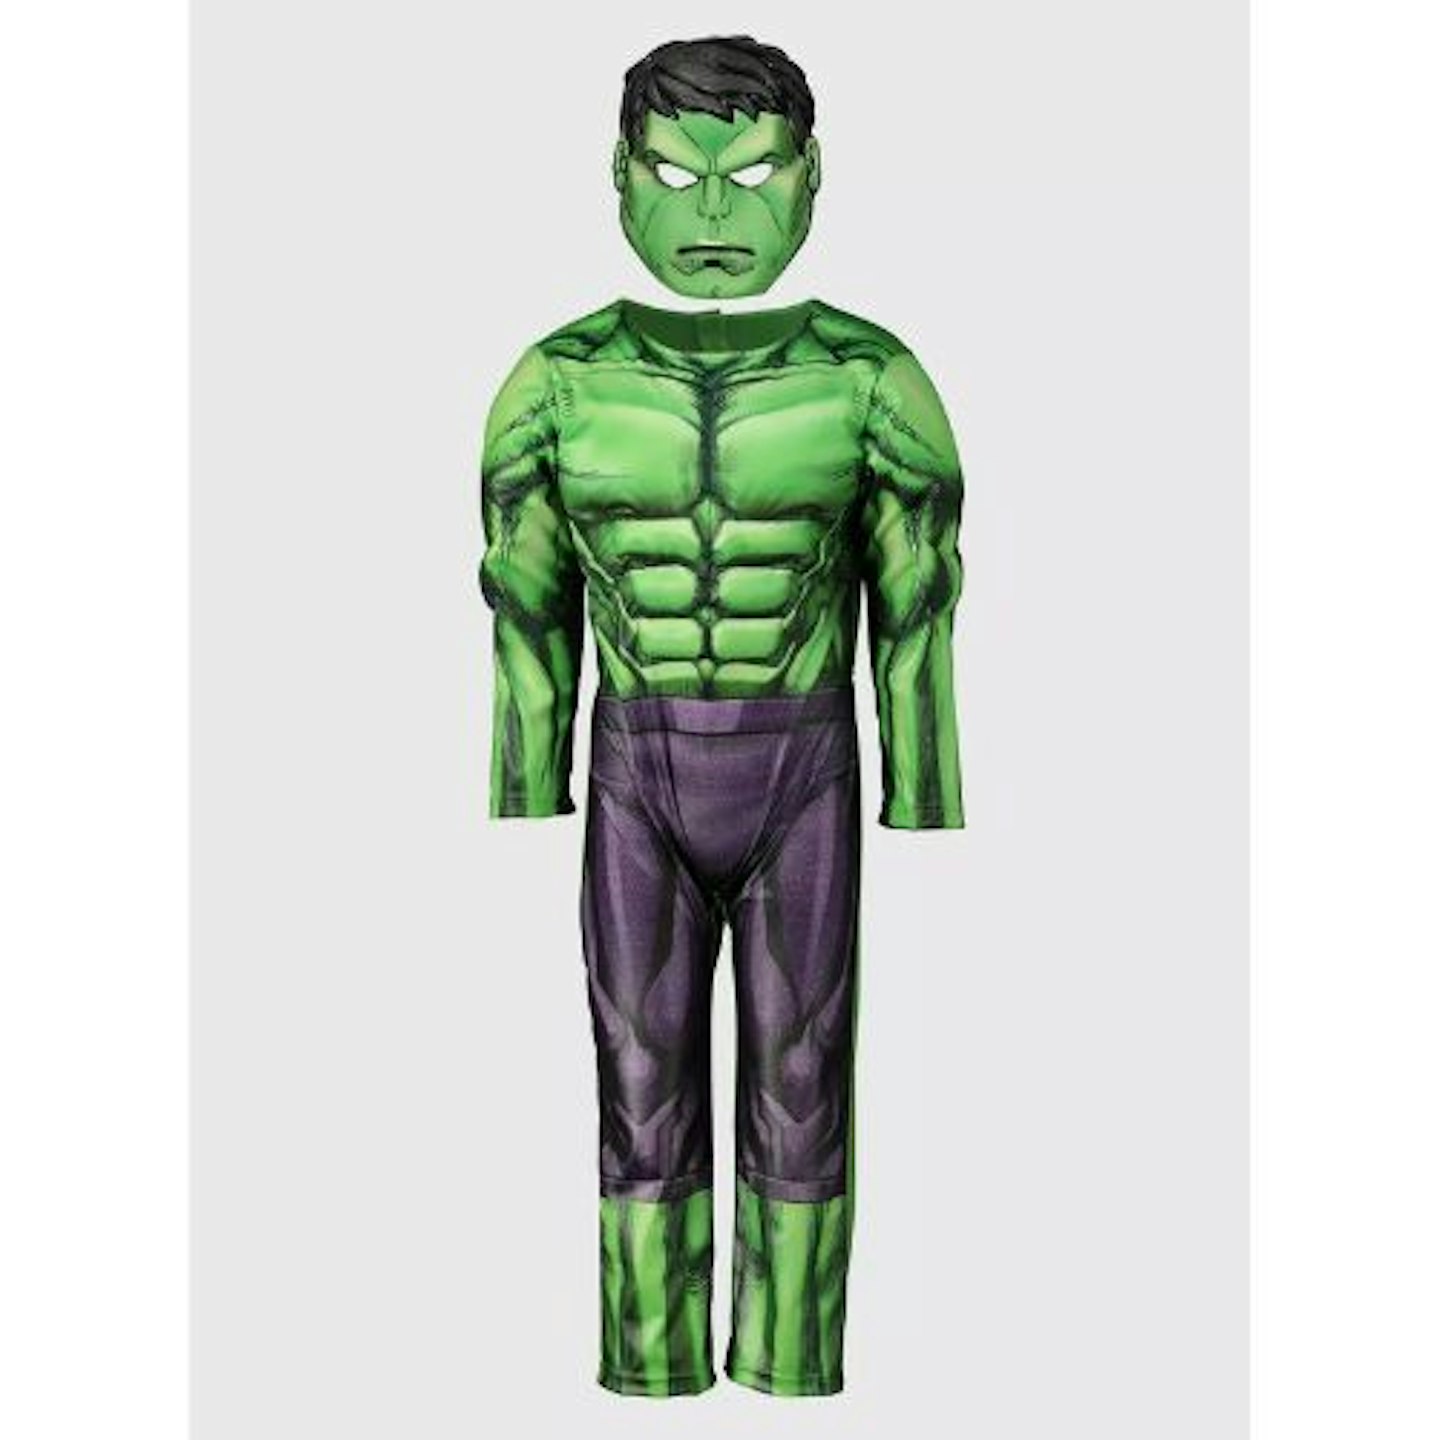 Kids Halloween Costumes: Marvel Avengers Hulk Costume